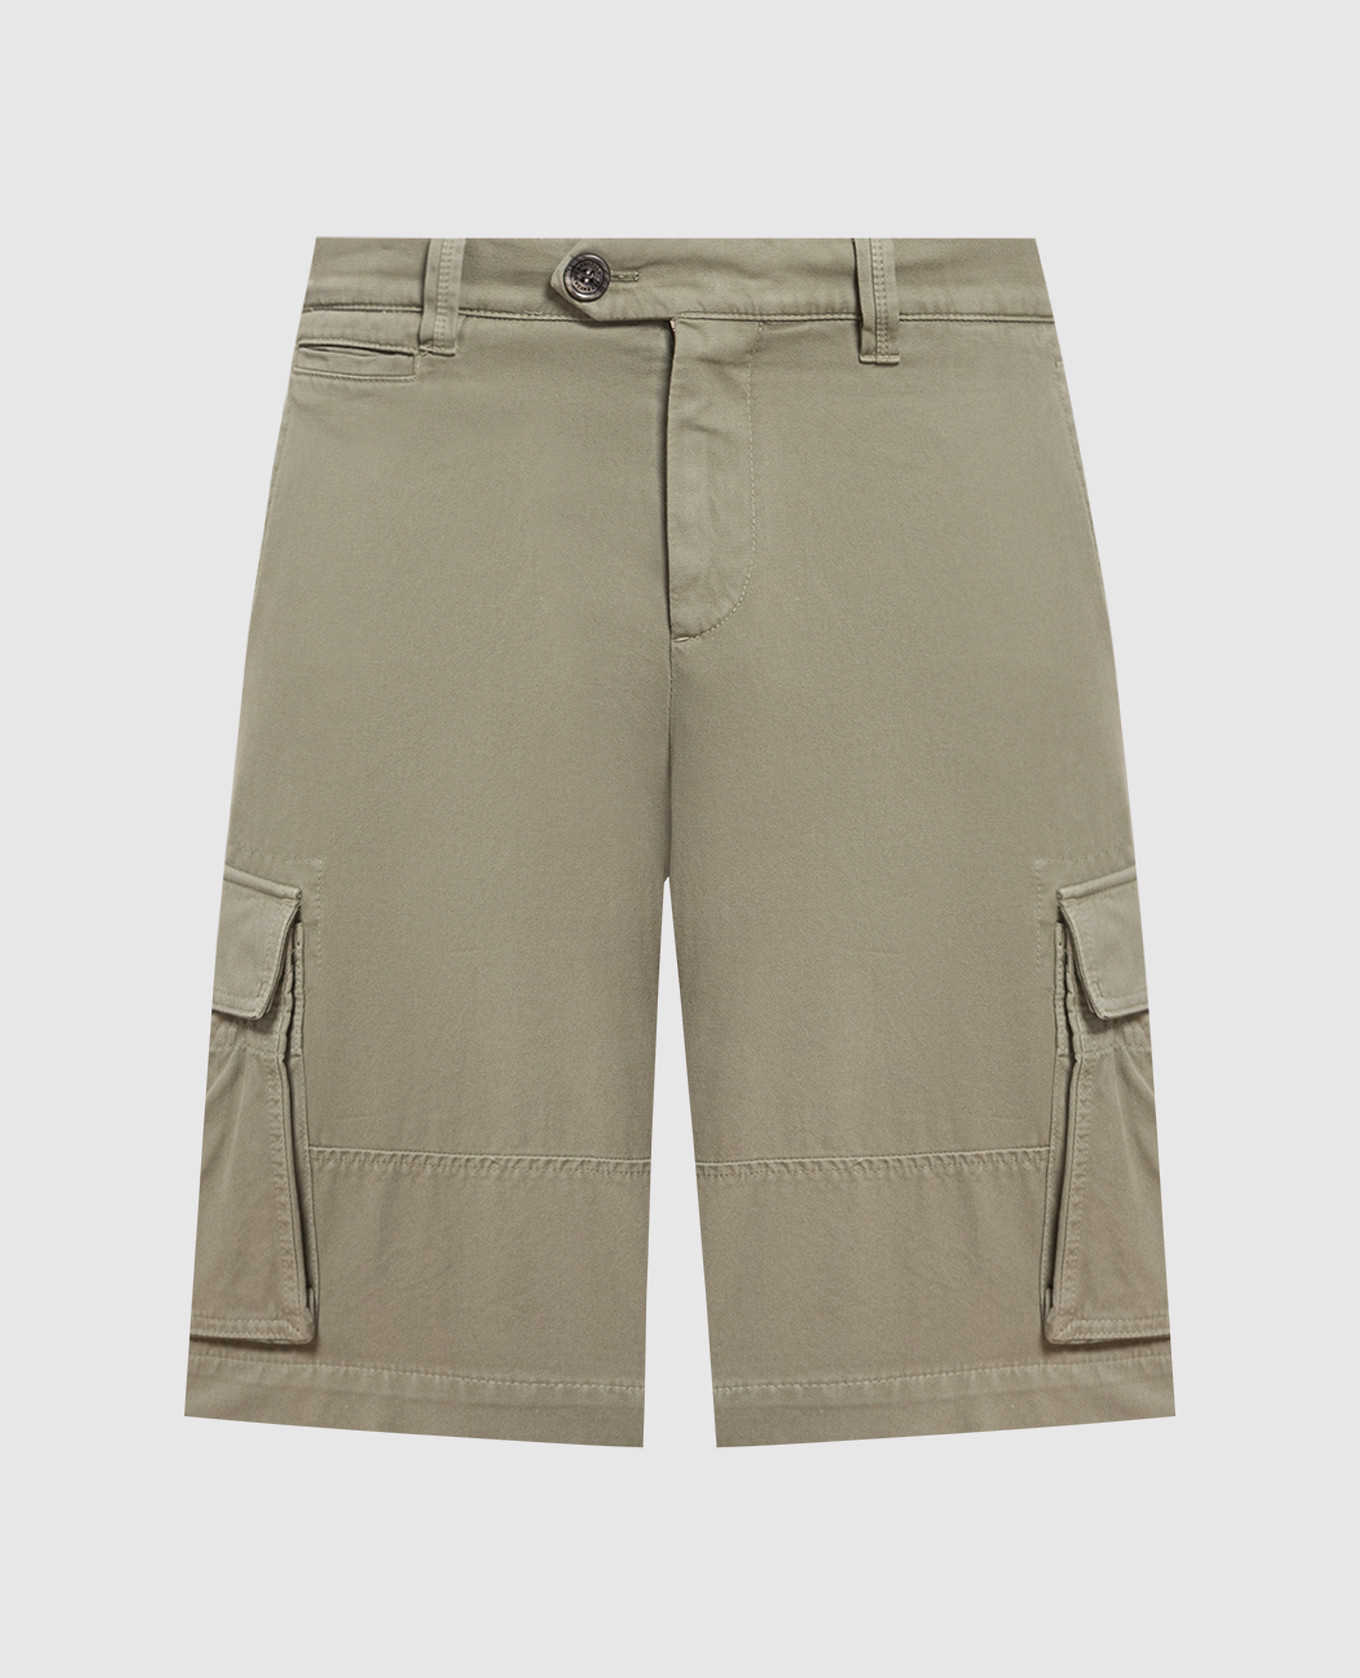 Green cargo shorts